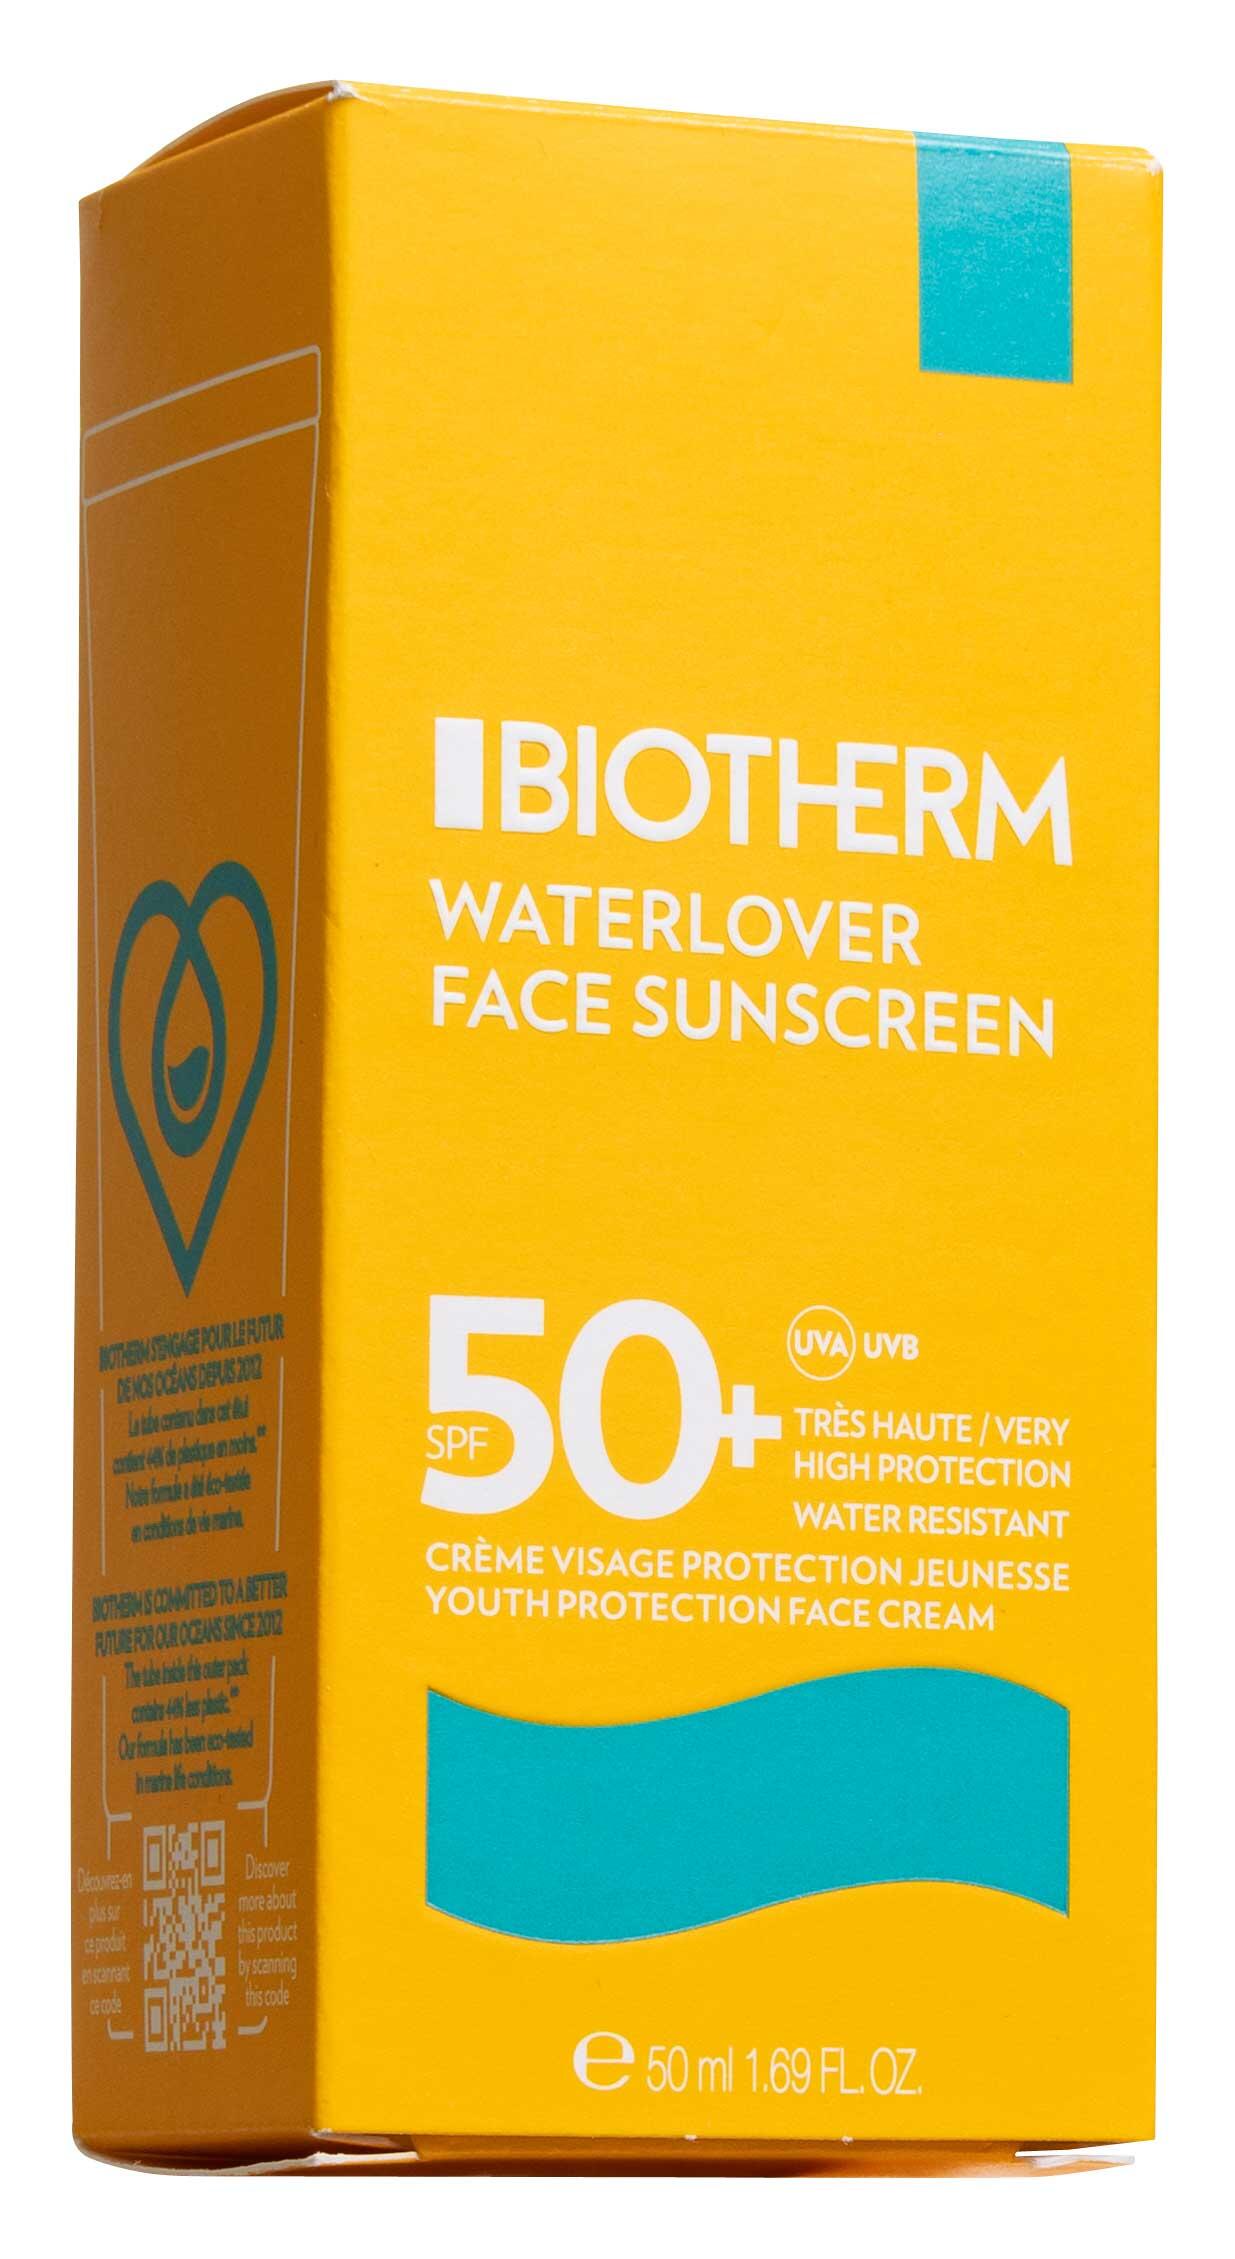 Waterlover face sunscreen SPF 50+ Biotherm